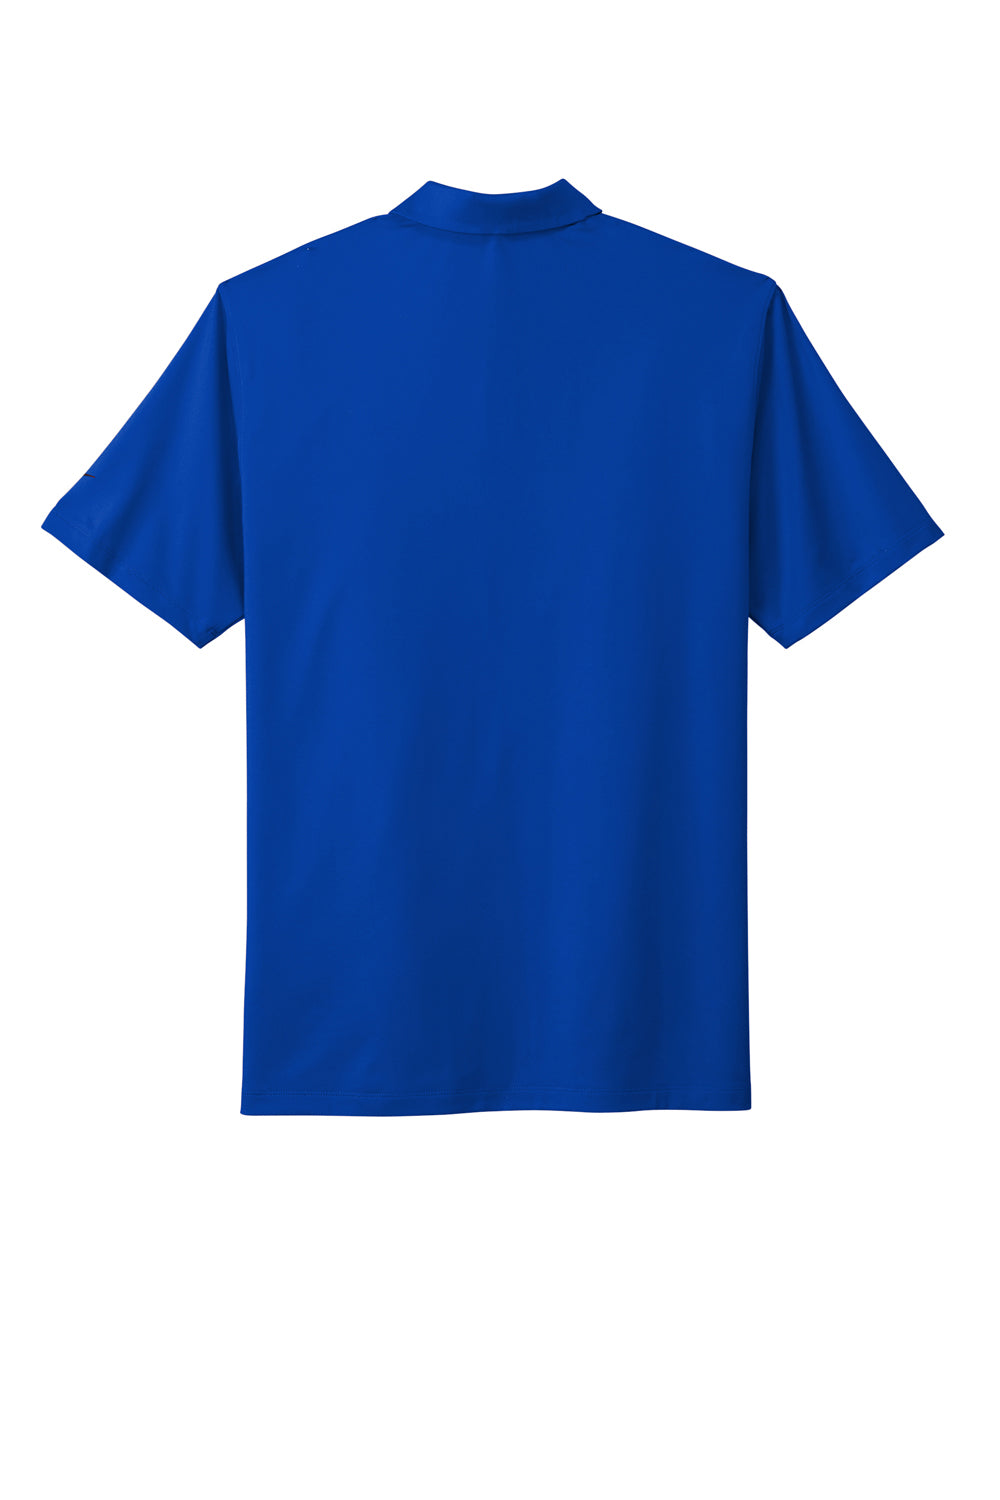 Nike NKDC2108 Mens Vapor Dri-Fit Moisture Wicking Short Sleeve Polo Shirt Game Royal Blue Flat Back